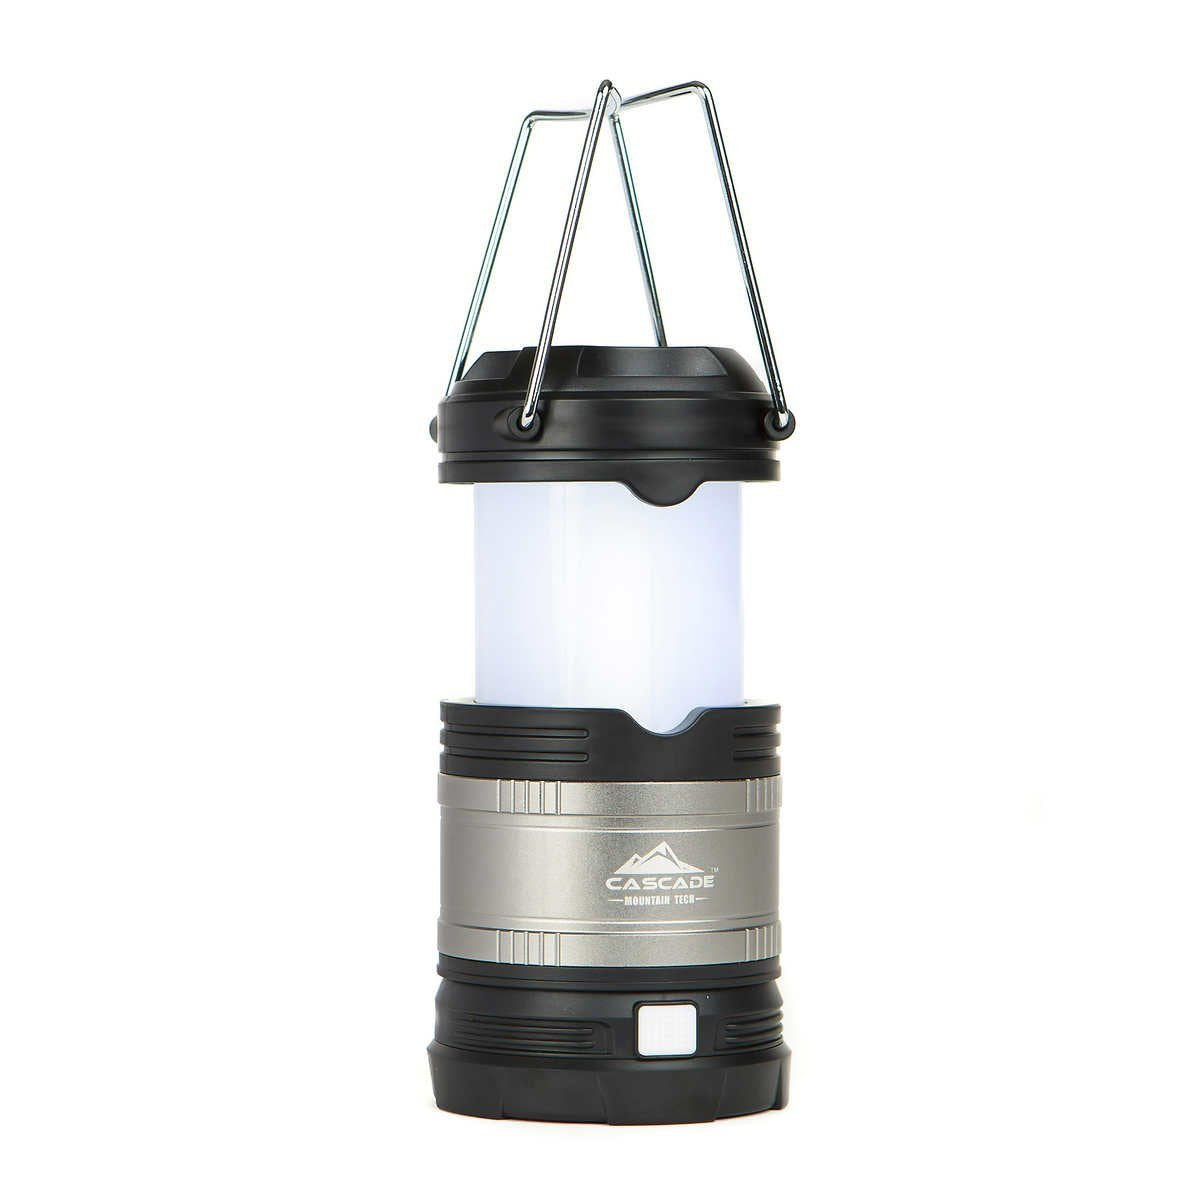 WeatherRite Pop Up LED Lantern